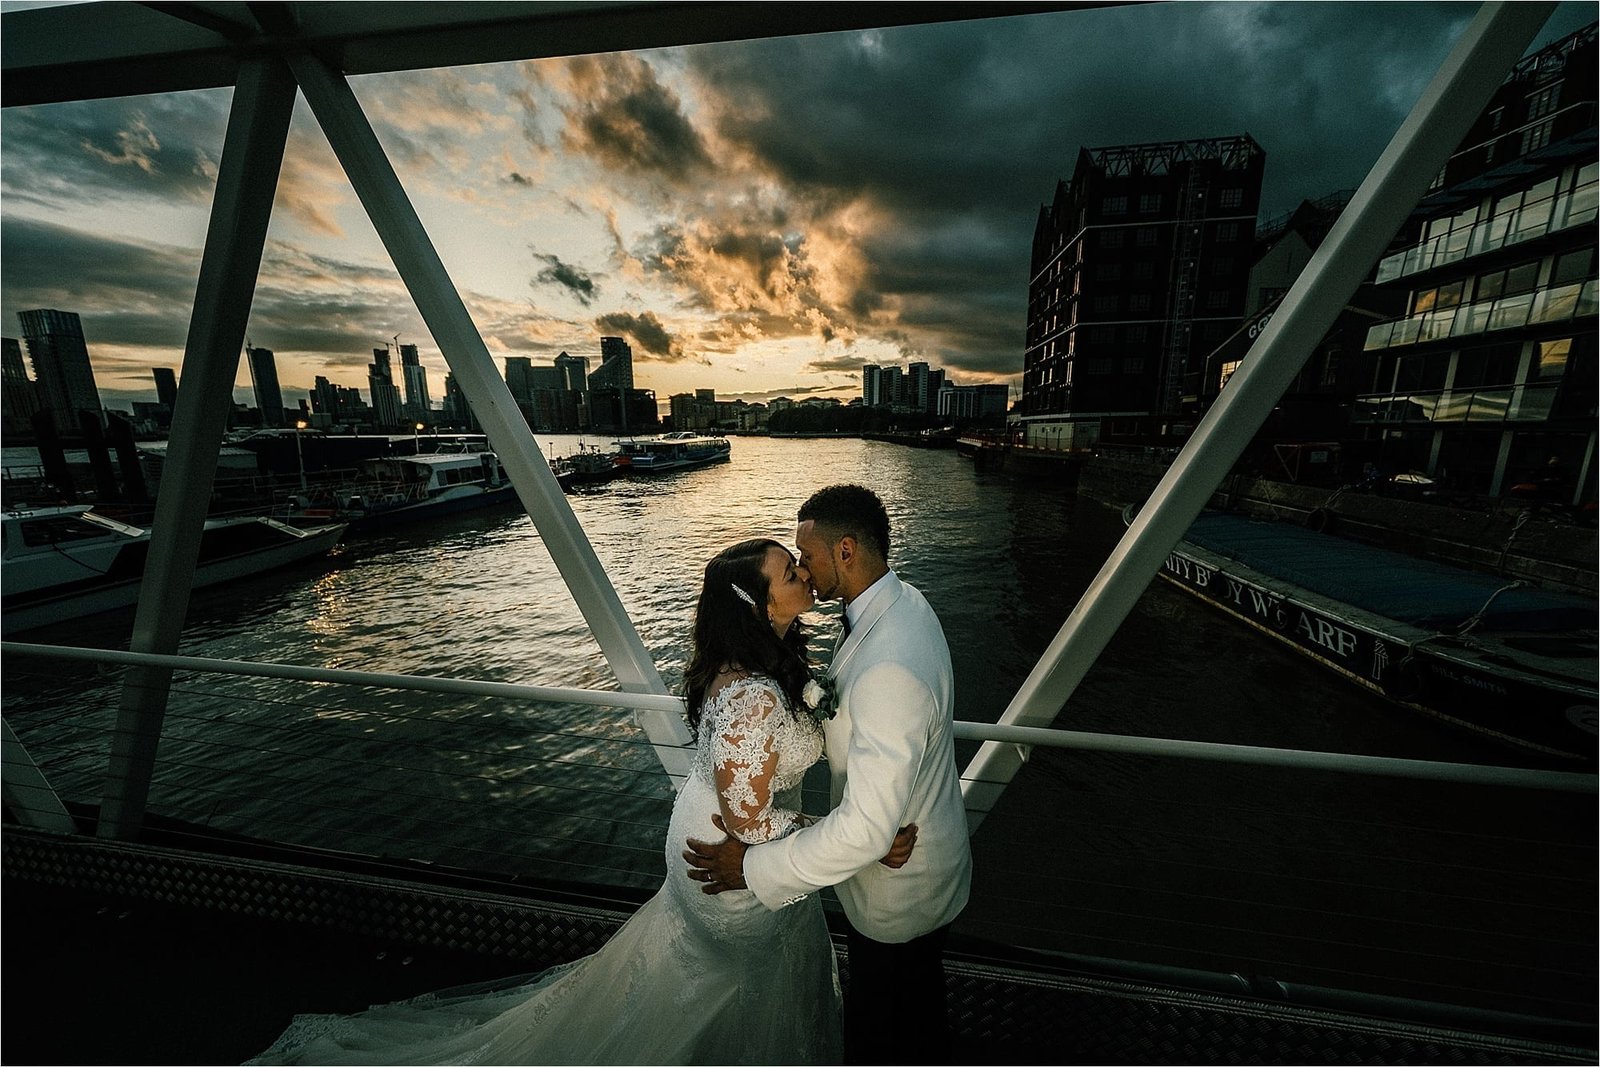 Trinity Buoy Wharf wedding photos